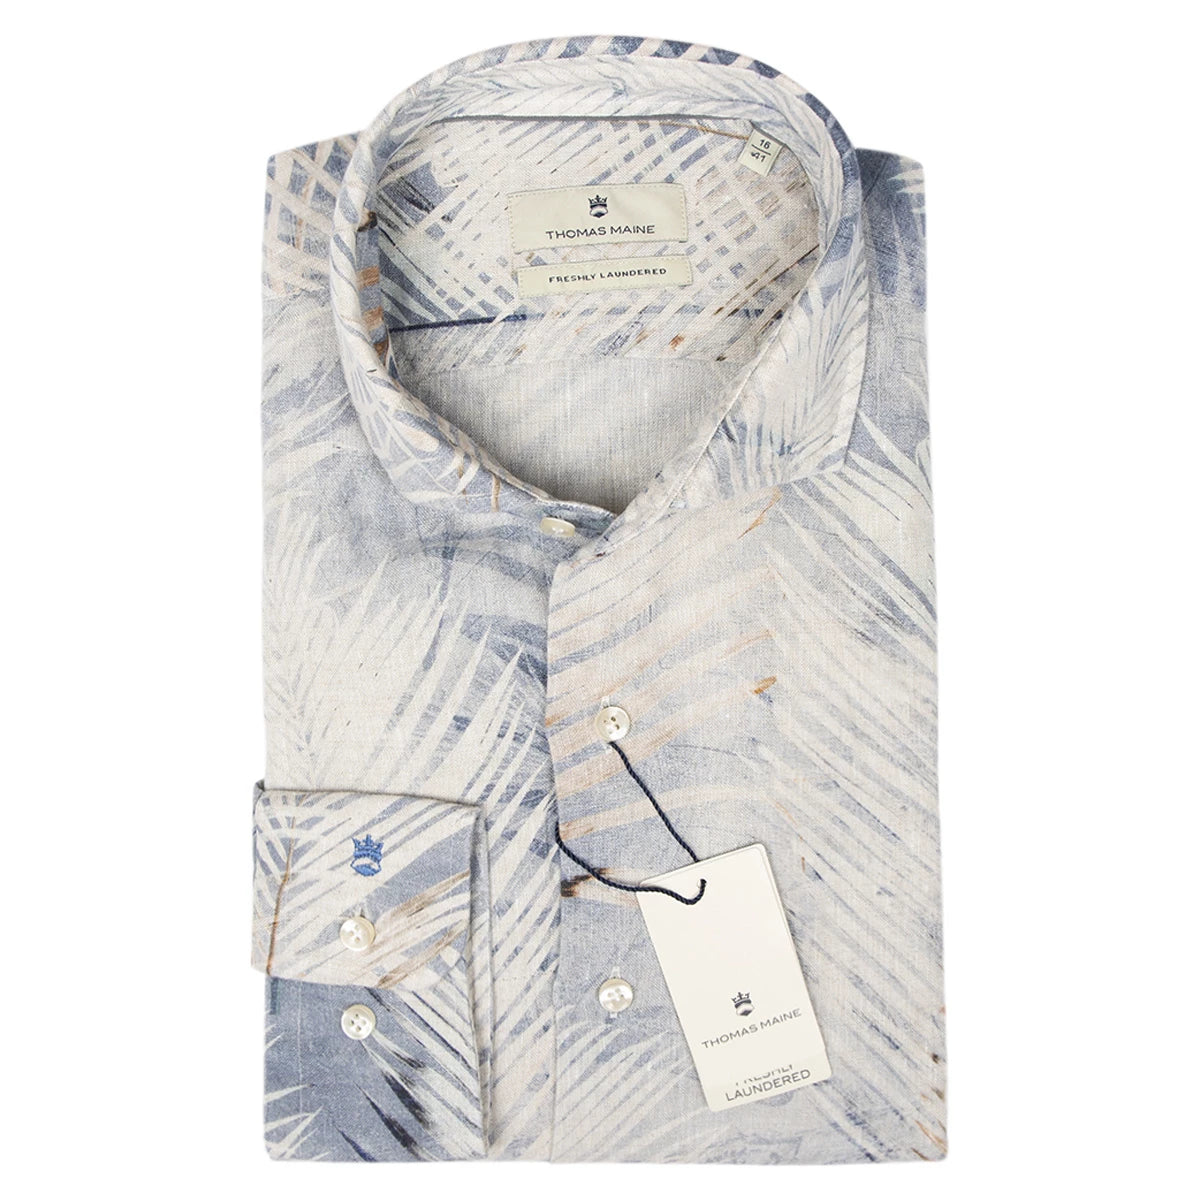 Thomas Maine Linnen Overhemd tailored fit beige/blauw